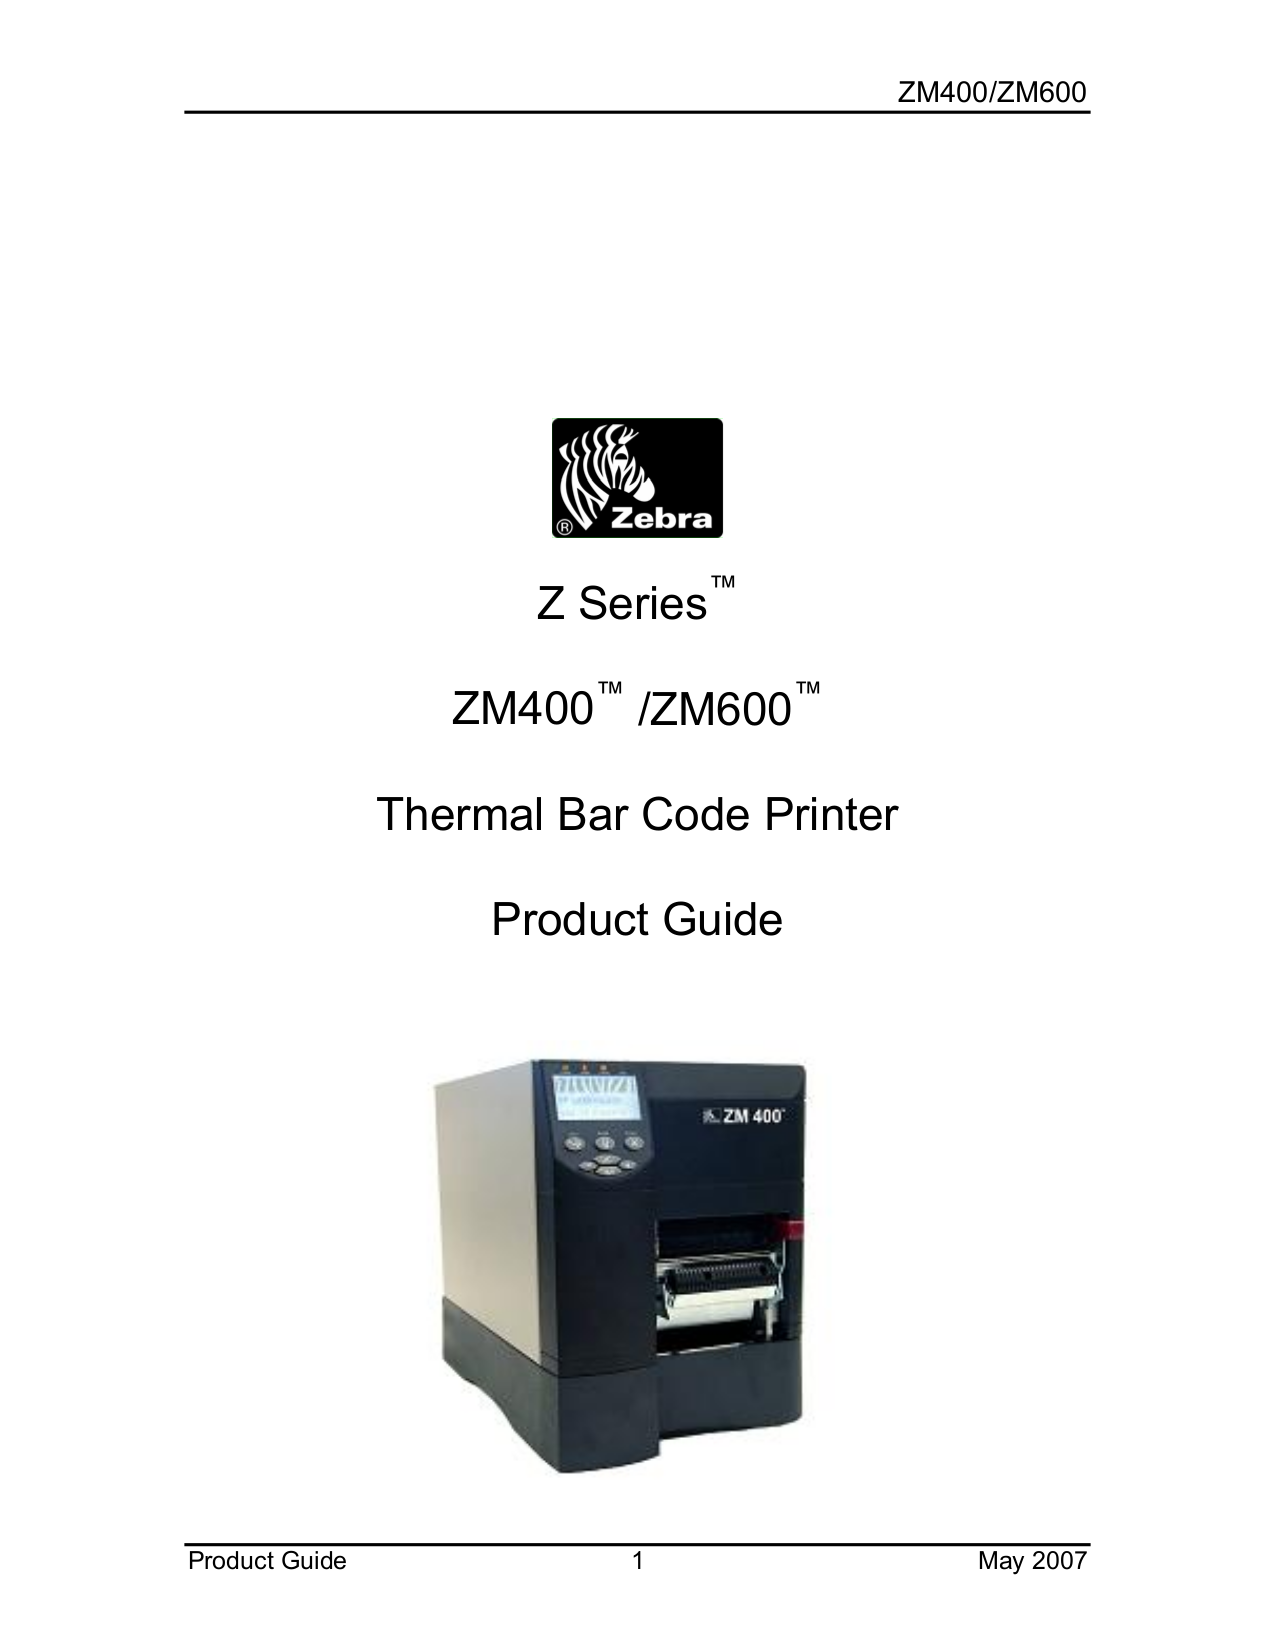 Download Free Pdf For Zebra Zm400 Printer Manual 4508